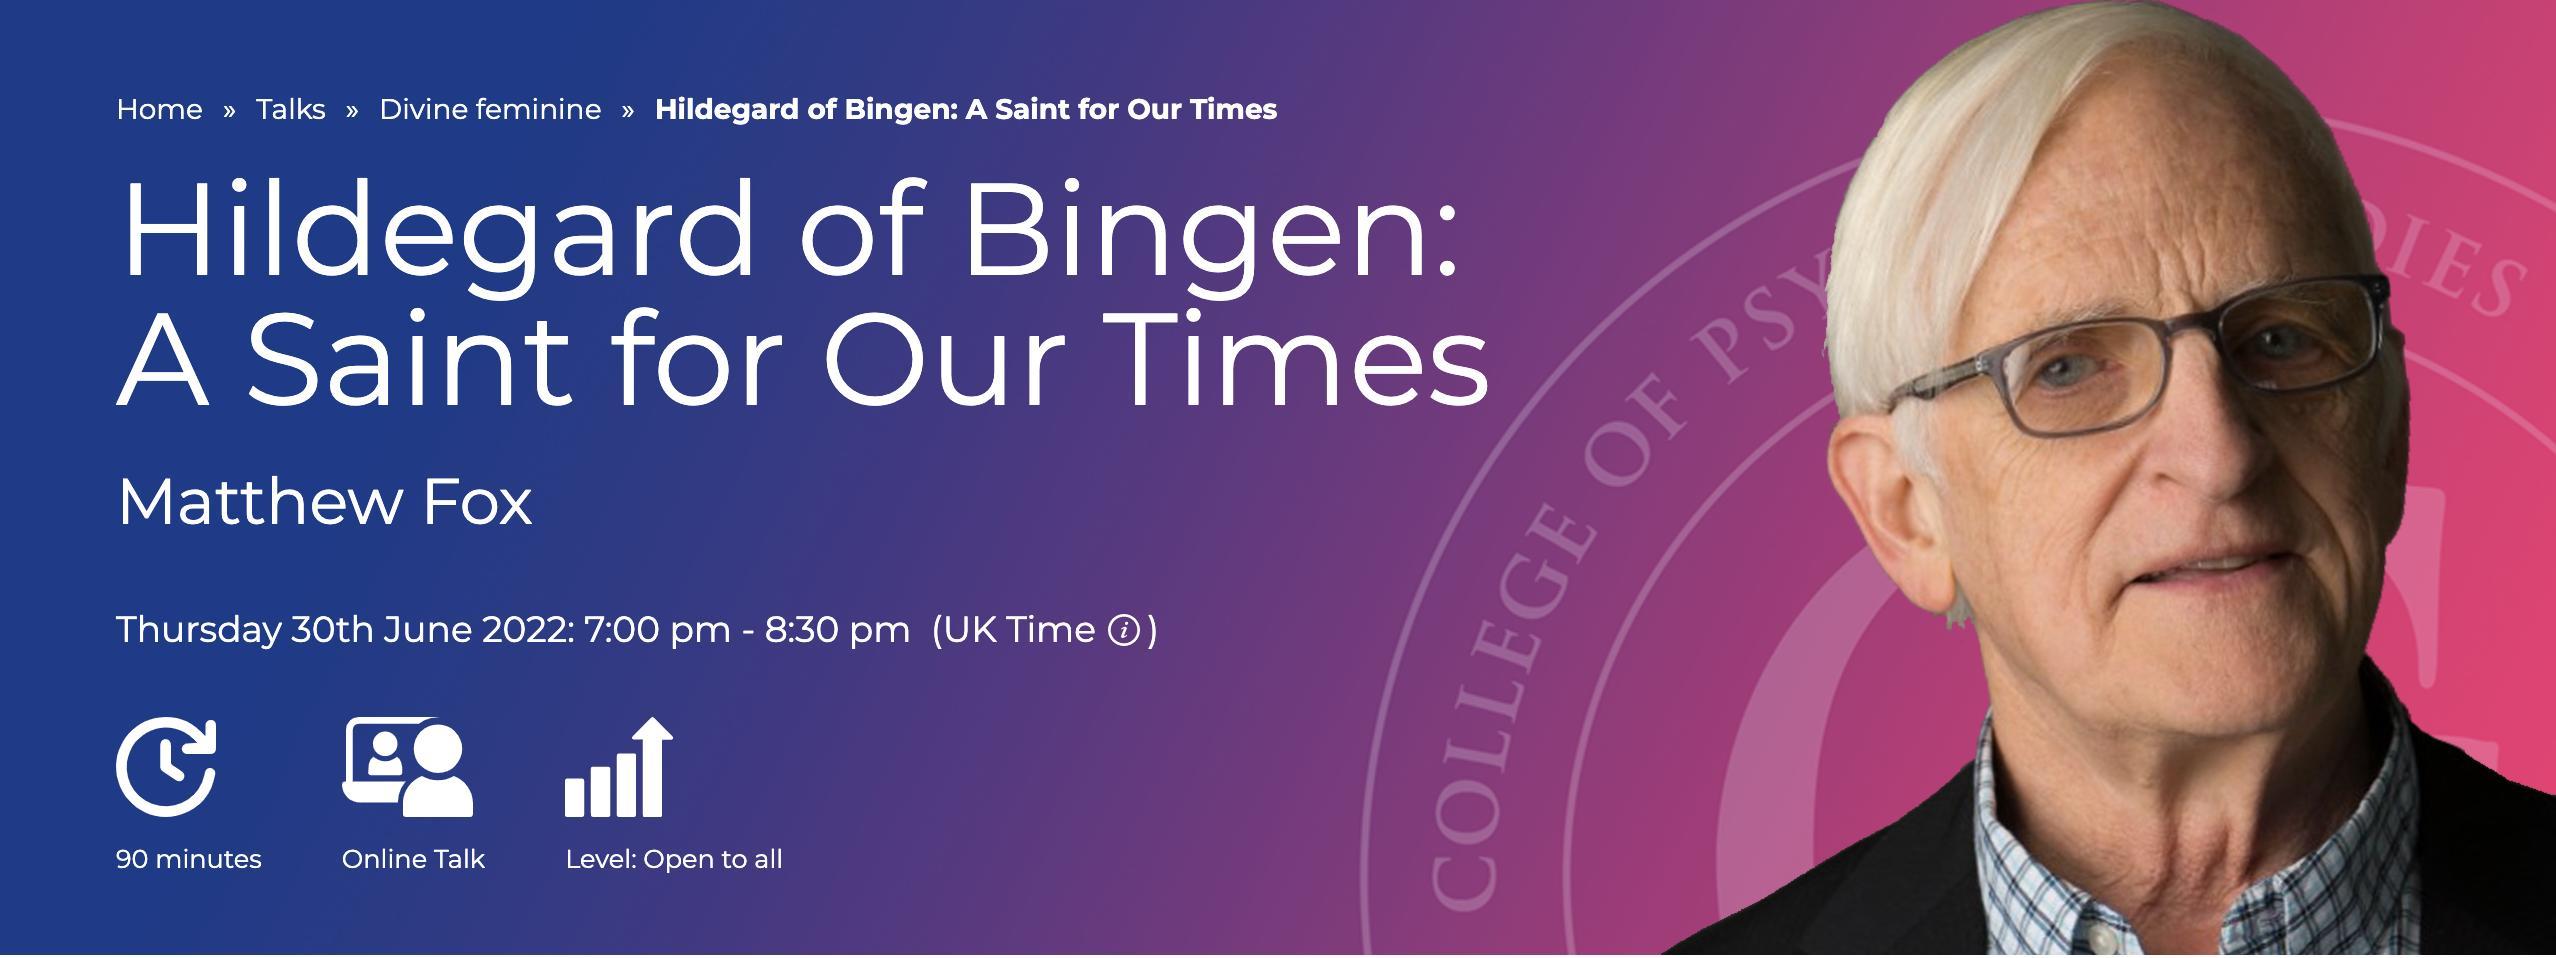 Banner for Hildegard of Bingen livestream talk with Matthew Fox